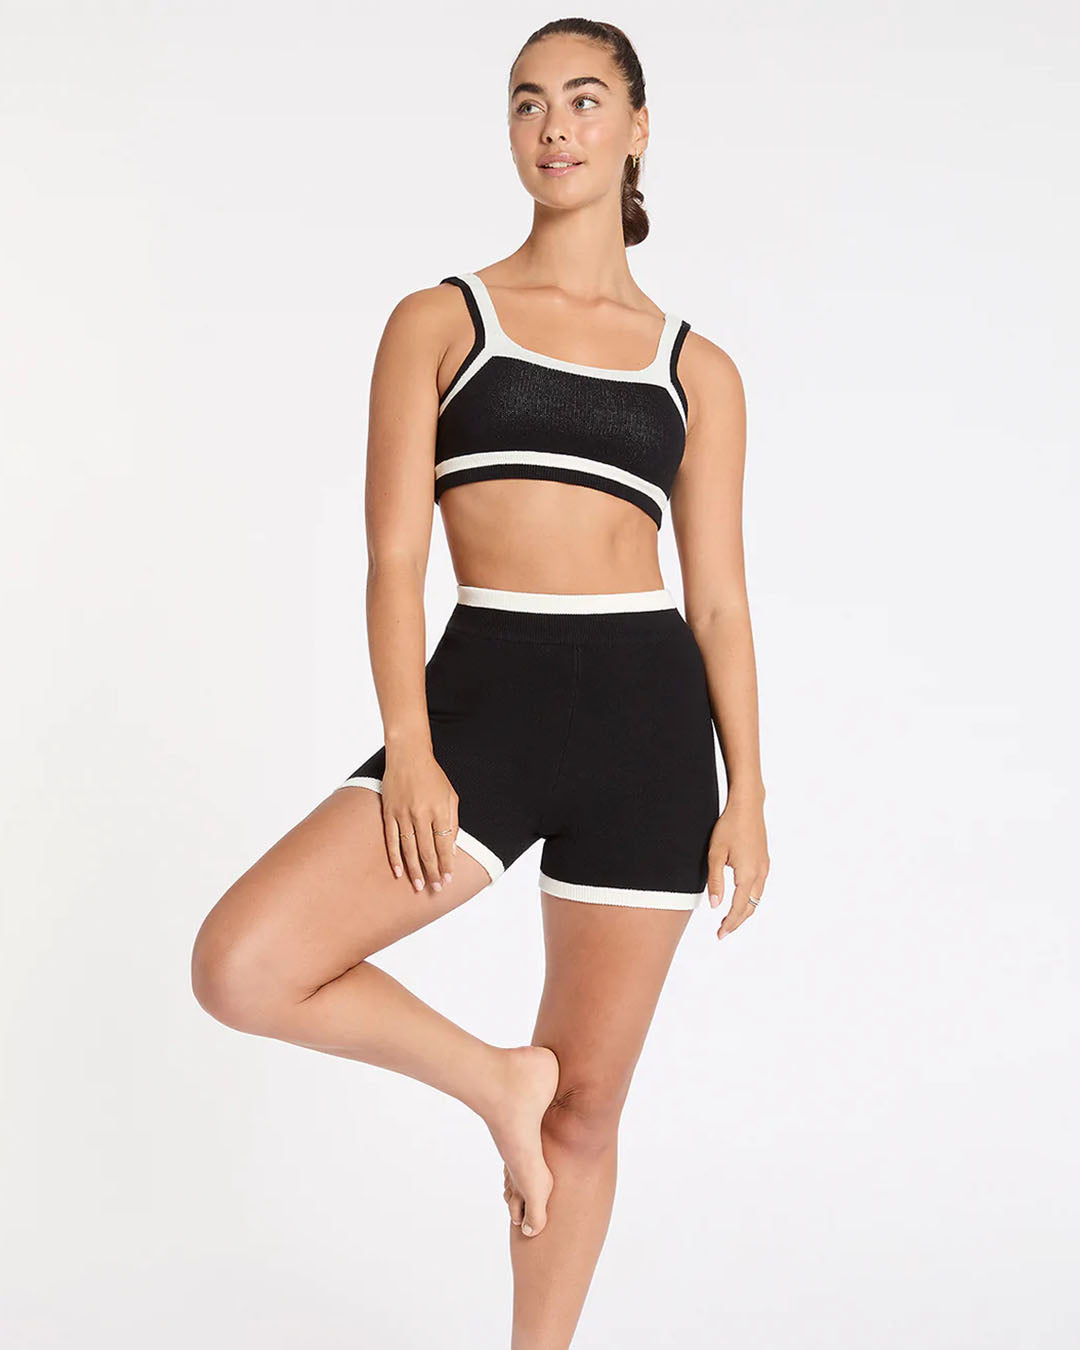 Close Knit Short - Black White Shorts by Nimble - Prae Store